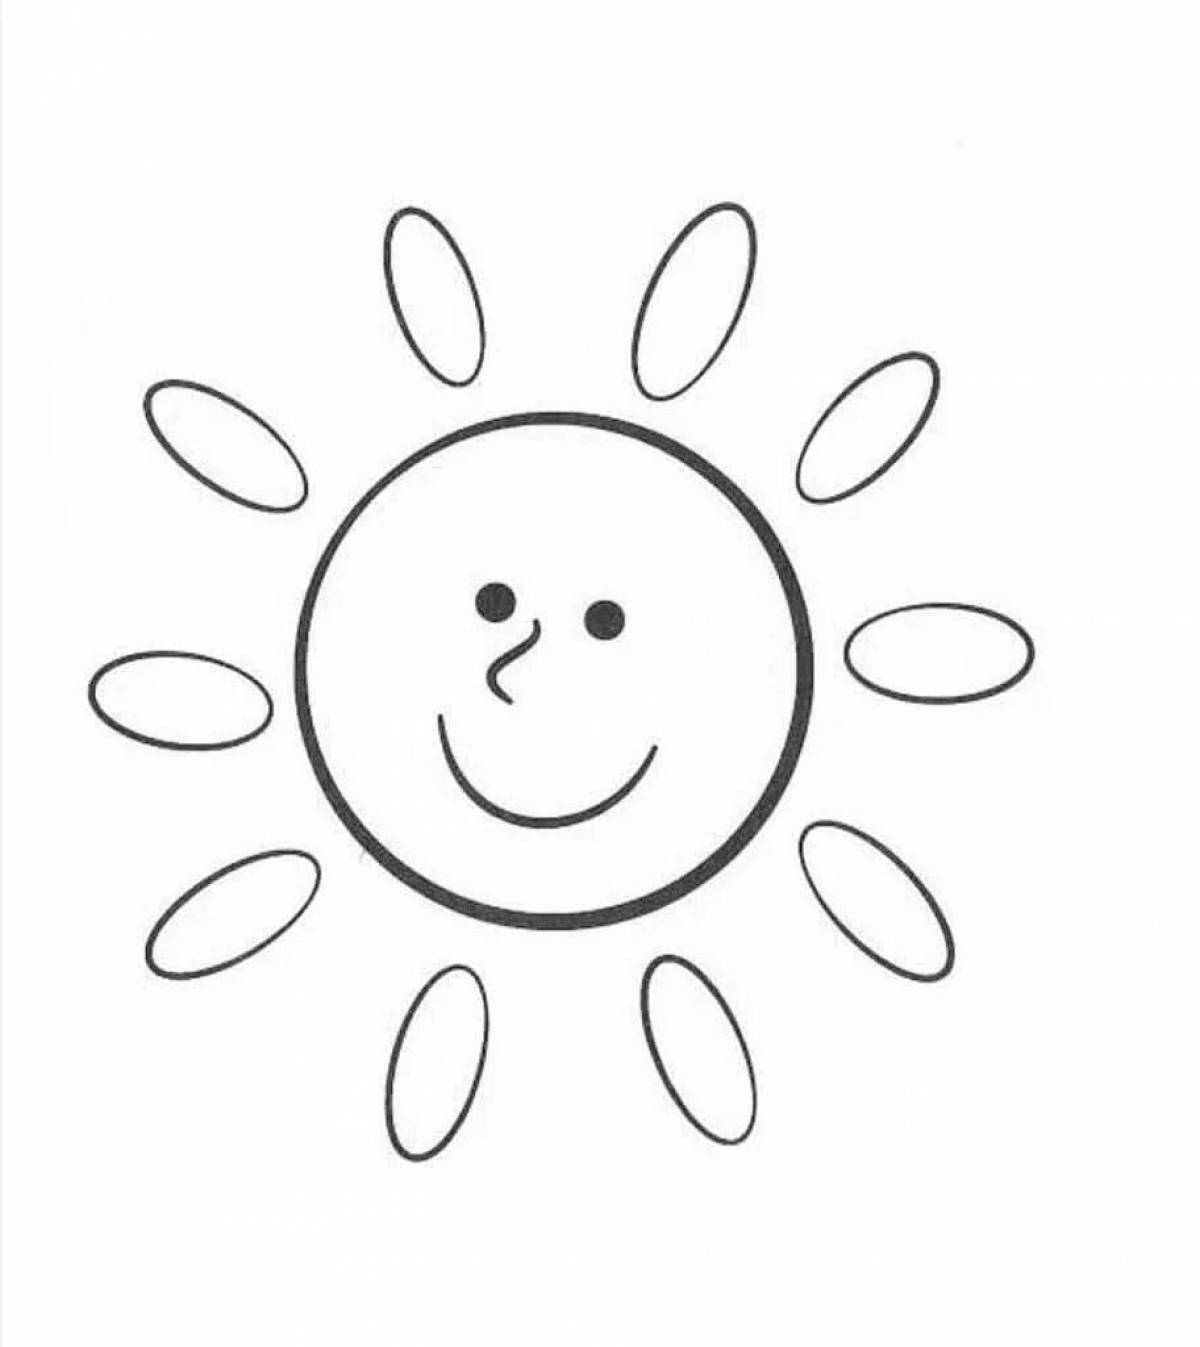 Изысканная раскраска солнце для детей 3-4 лет